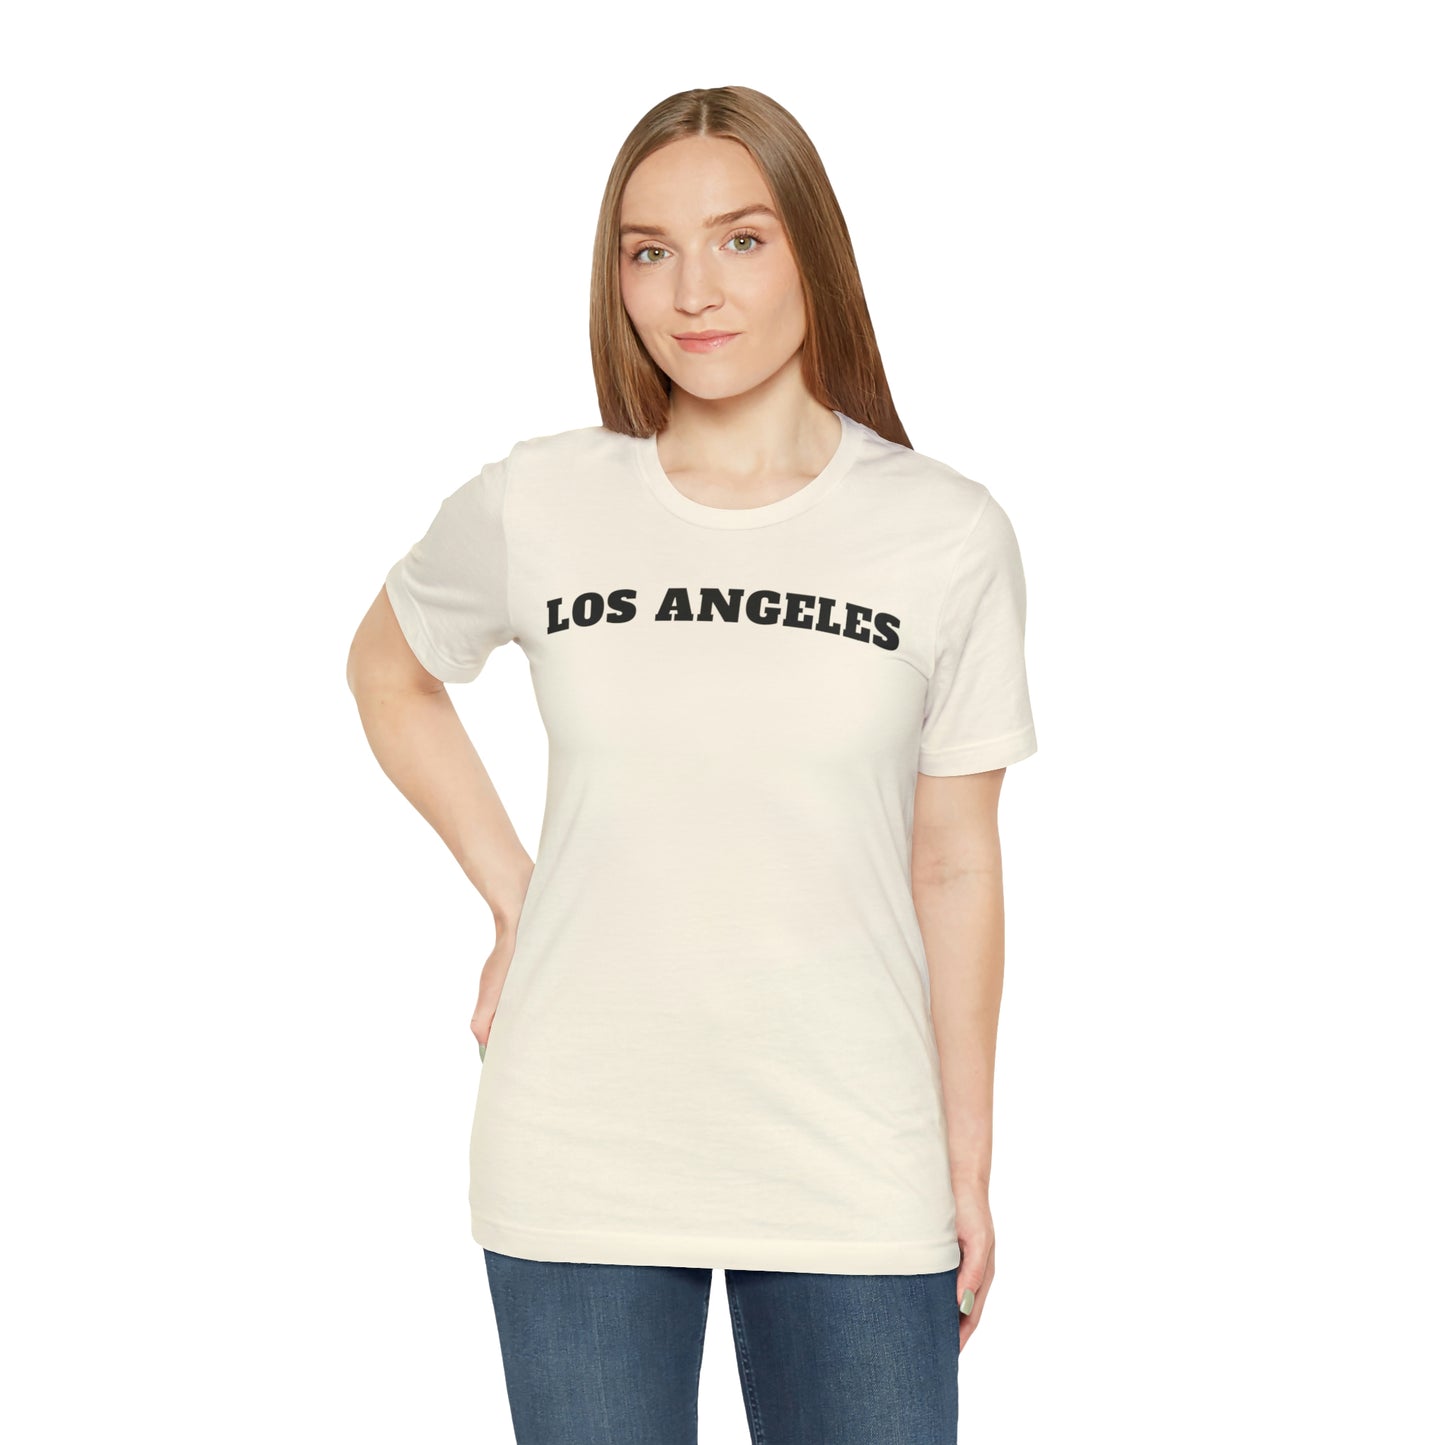 Los Angeles Unisex Jersey Short Sleeve Tee